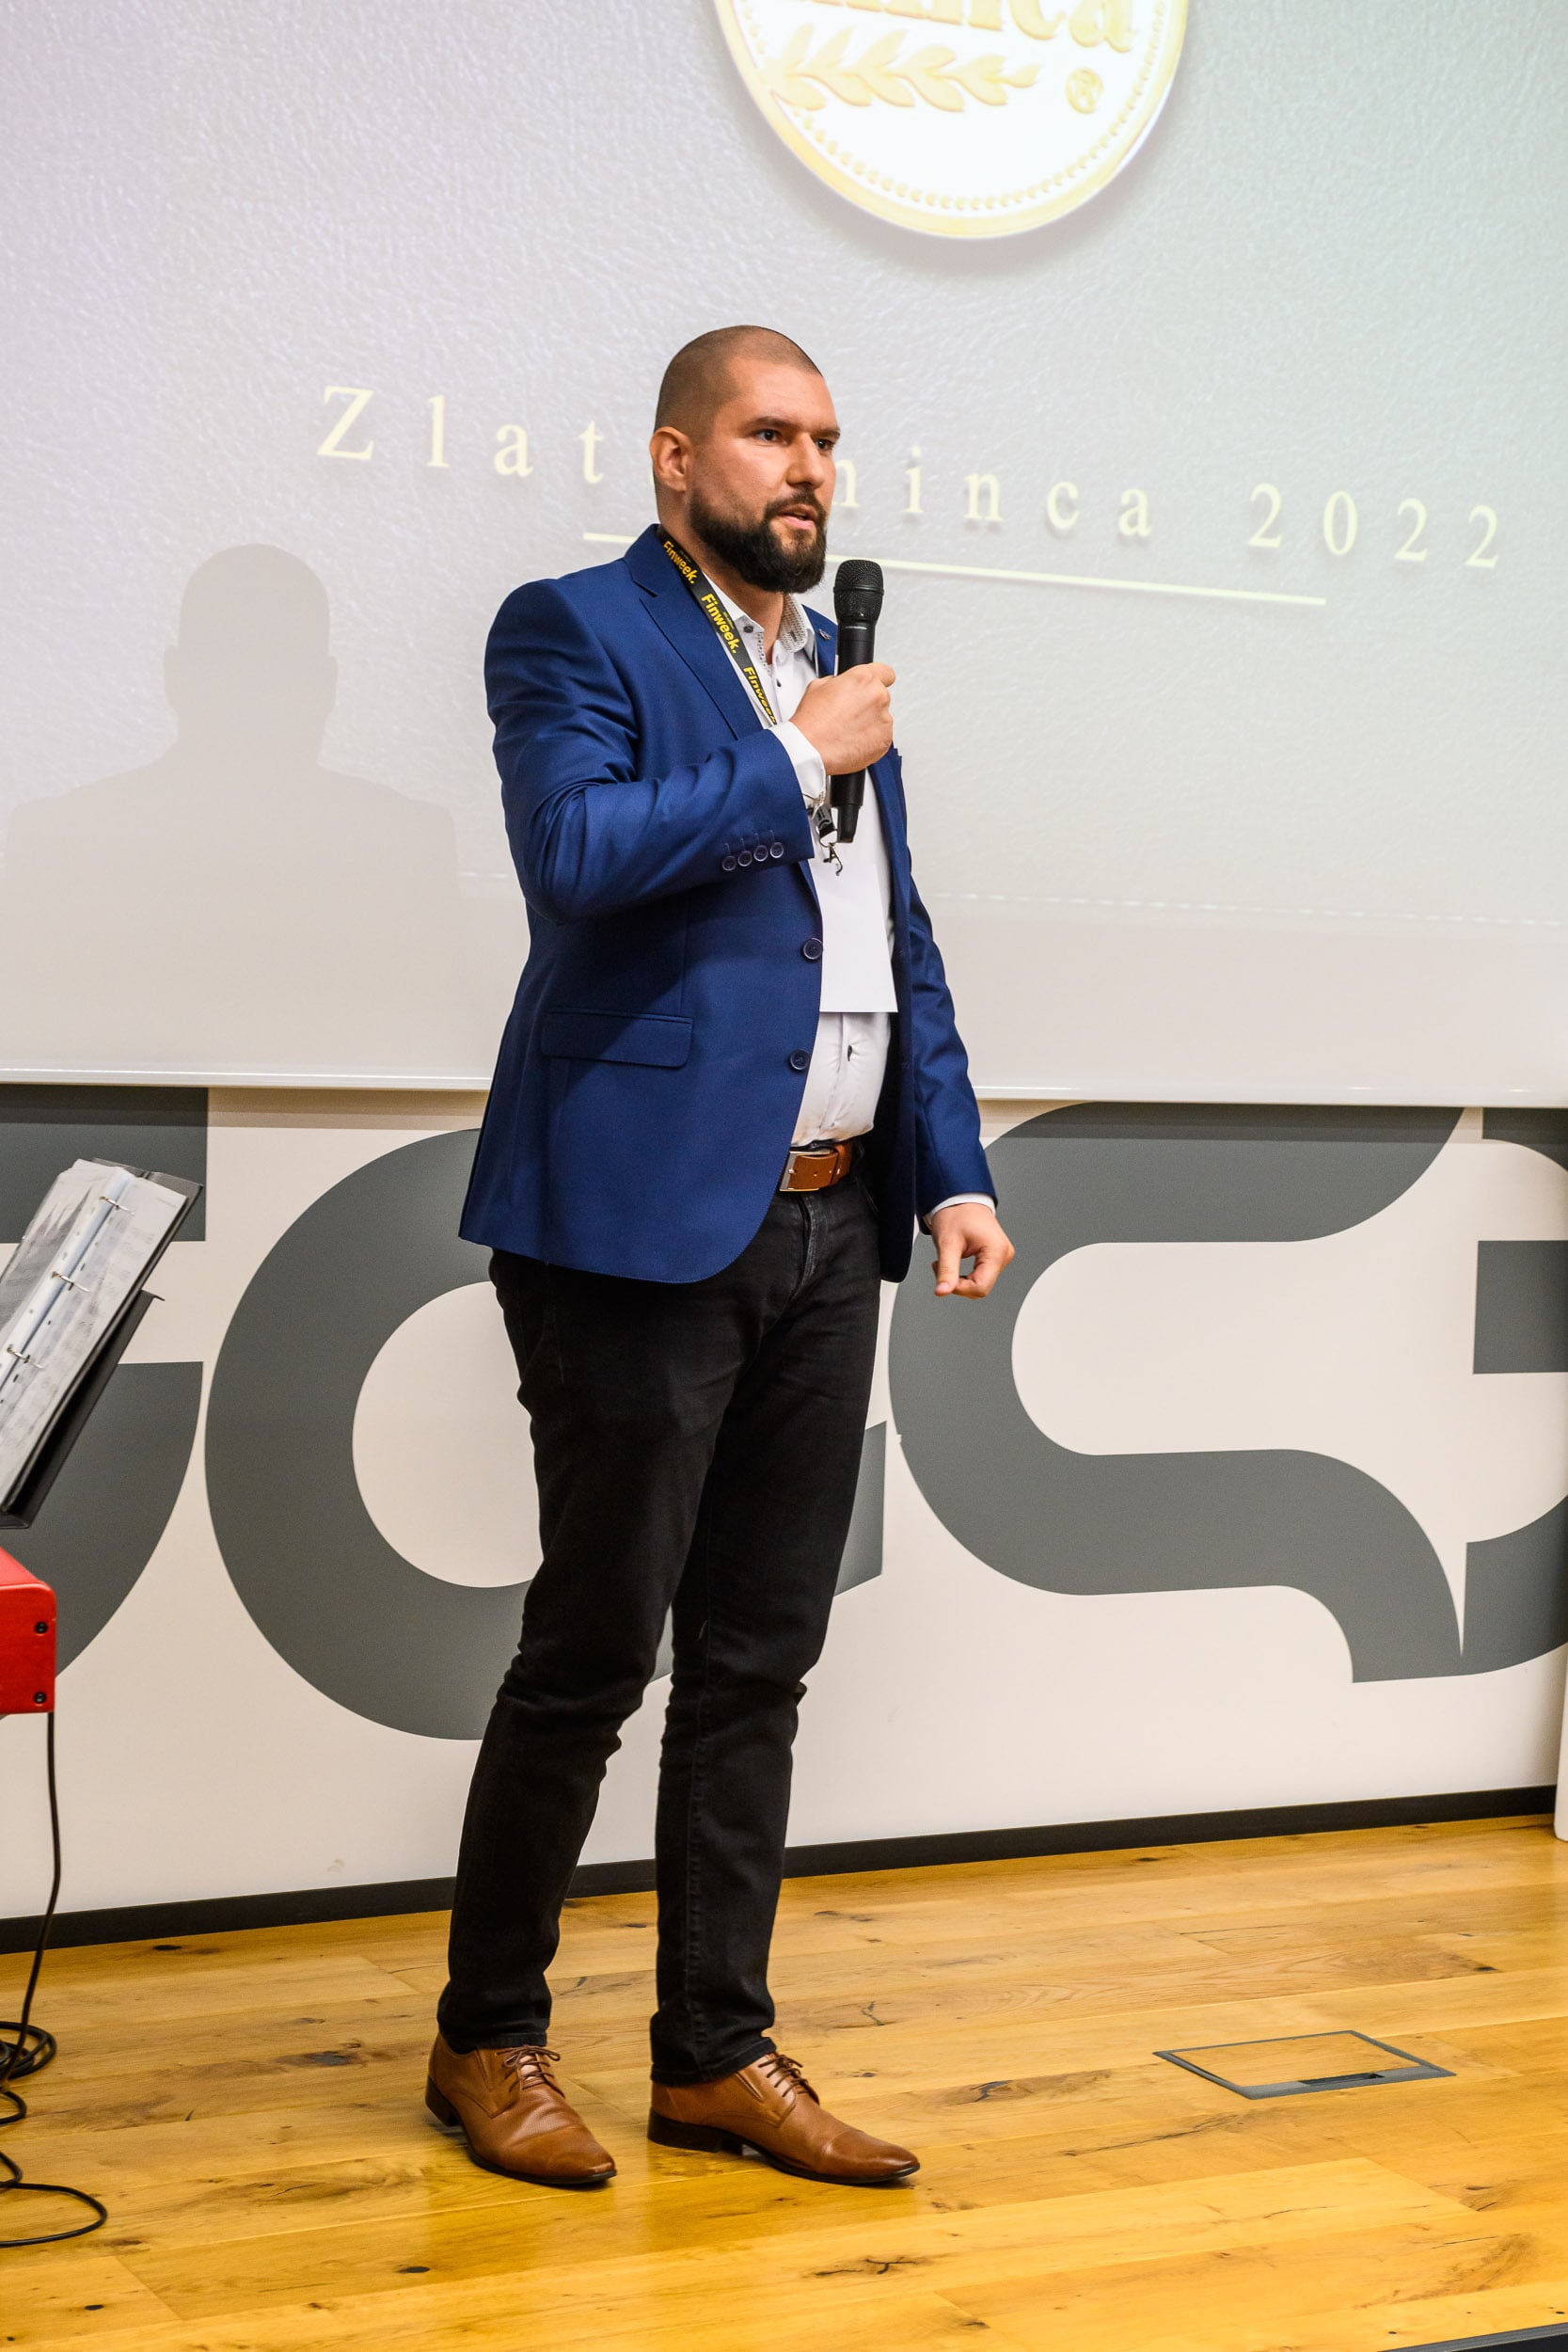 Finappie Co-founder Tomáš Tibenský at Zlata Minca 2022 event